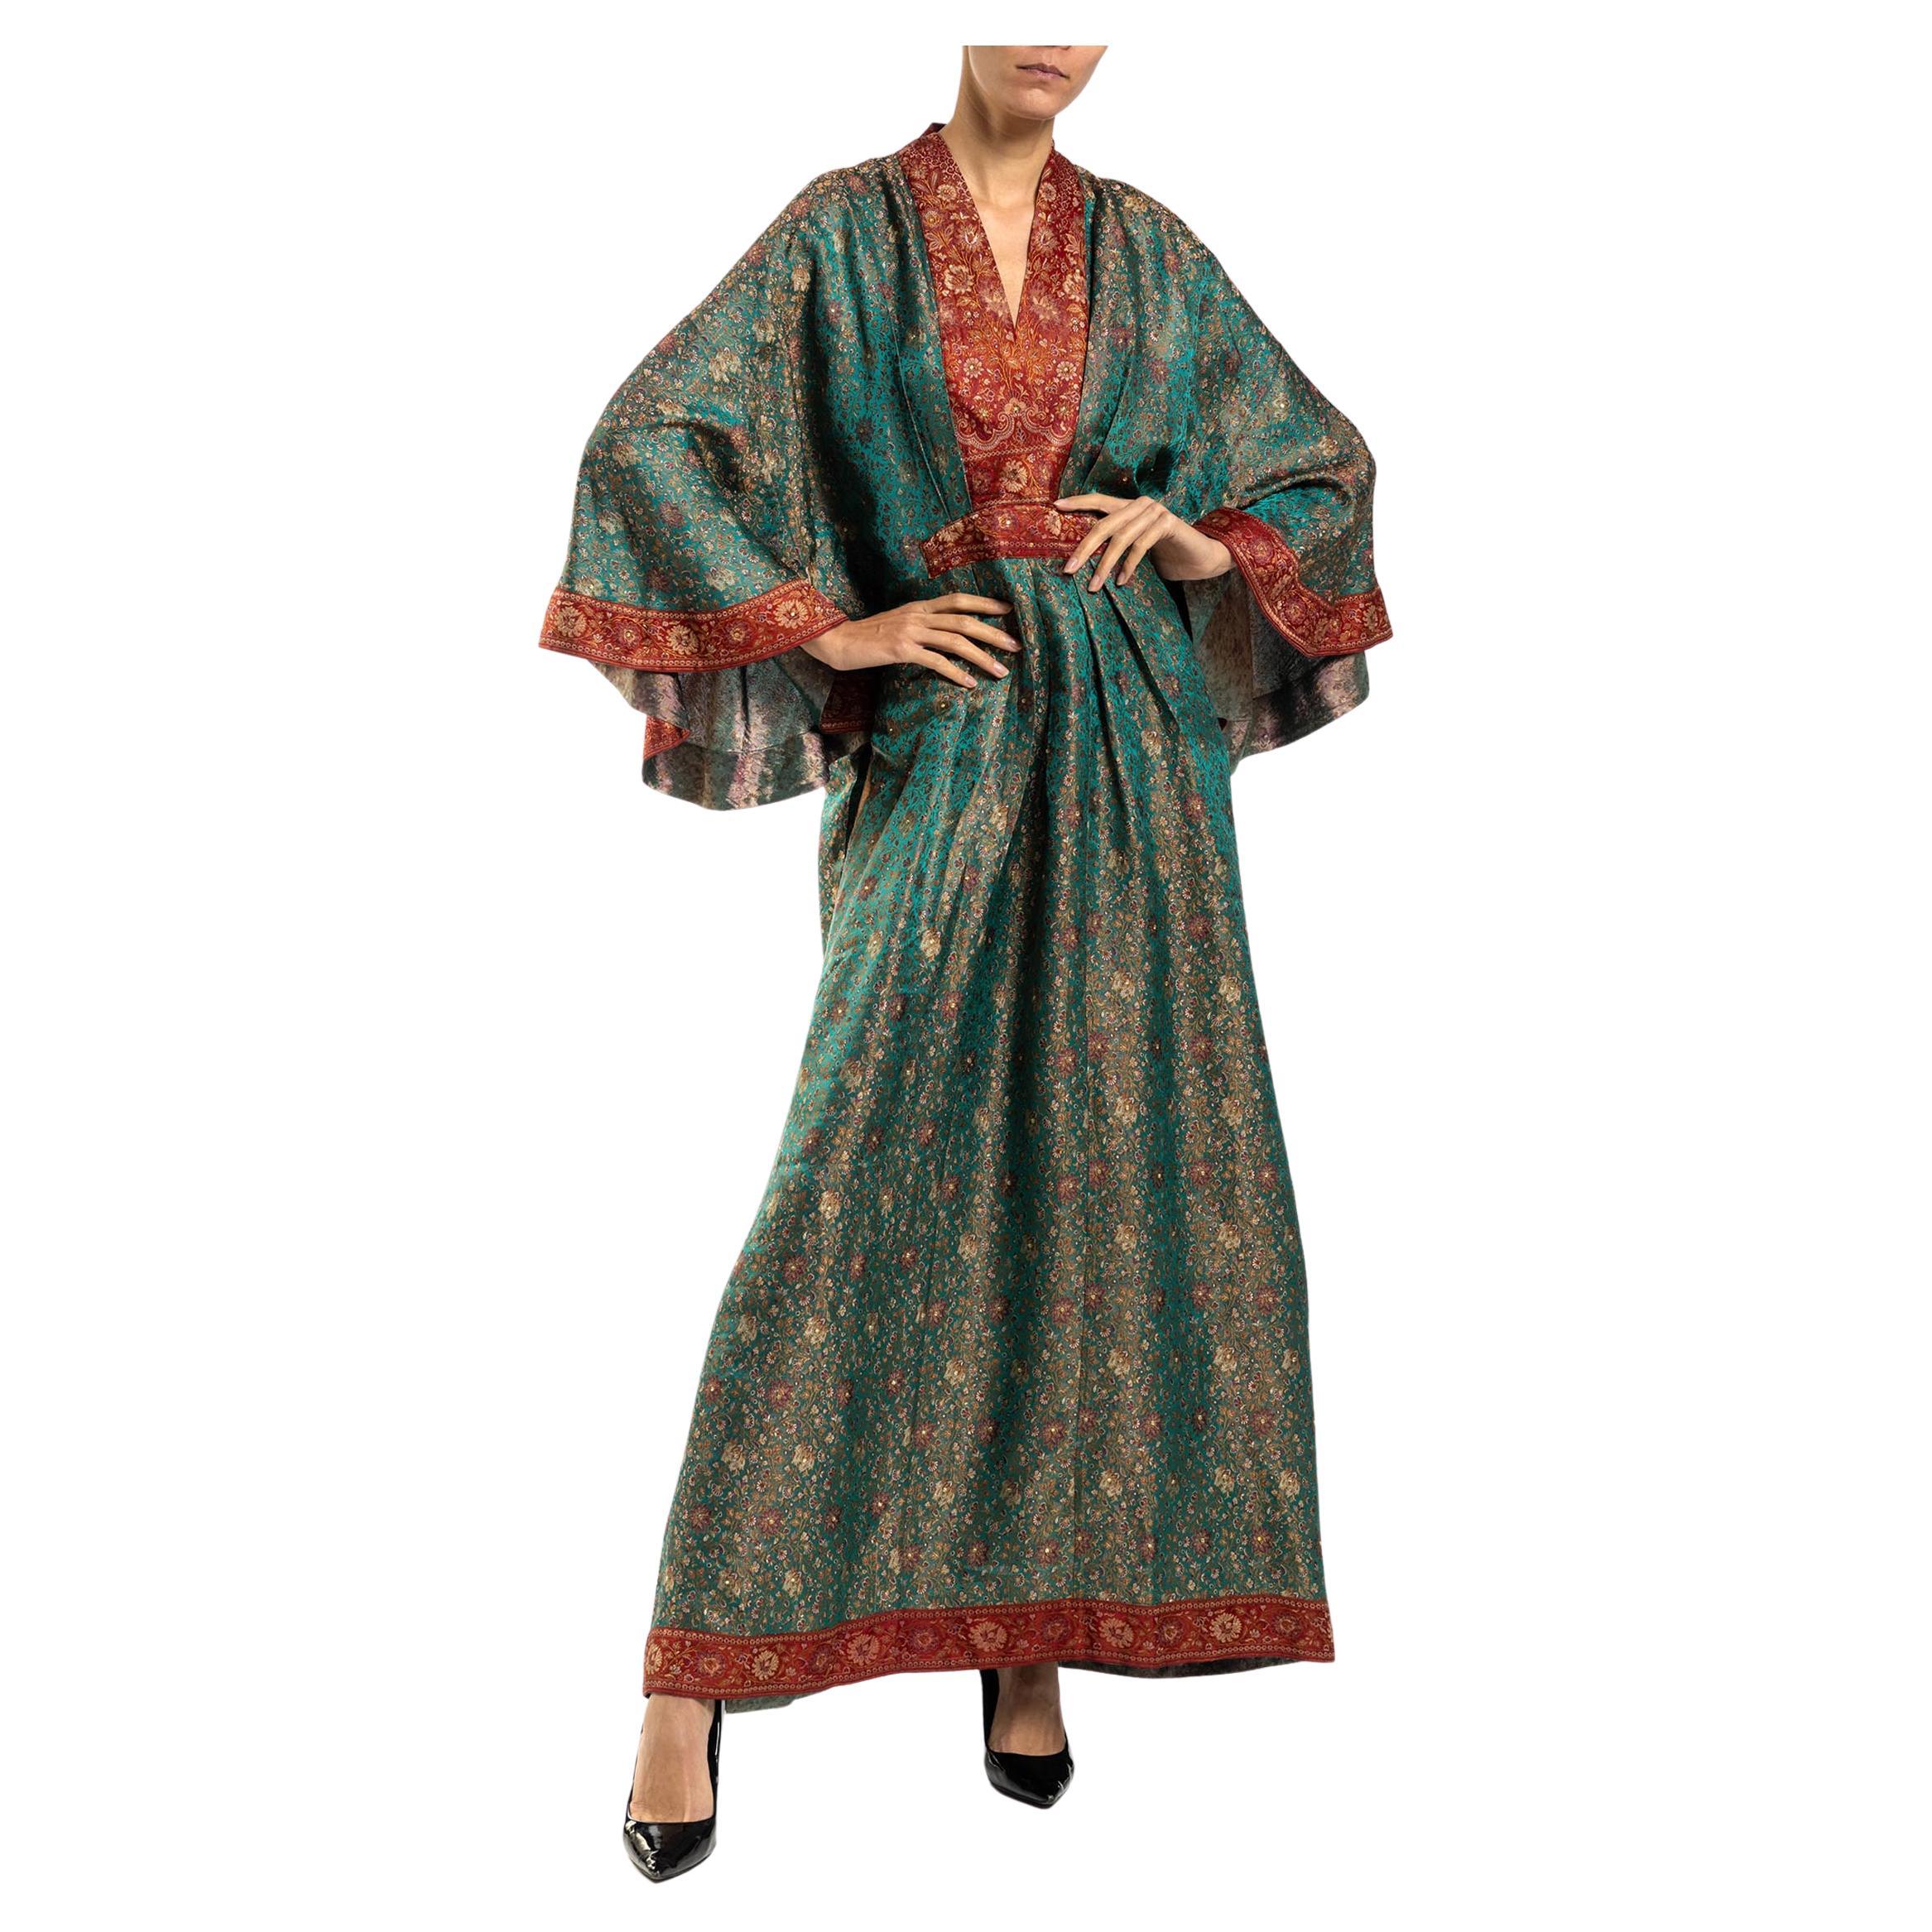 MORPHEW COLLECTION Teal & Burgundy Floral Silk Studded Kaftan Made From Vintage For Sale